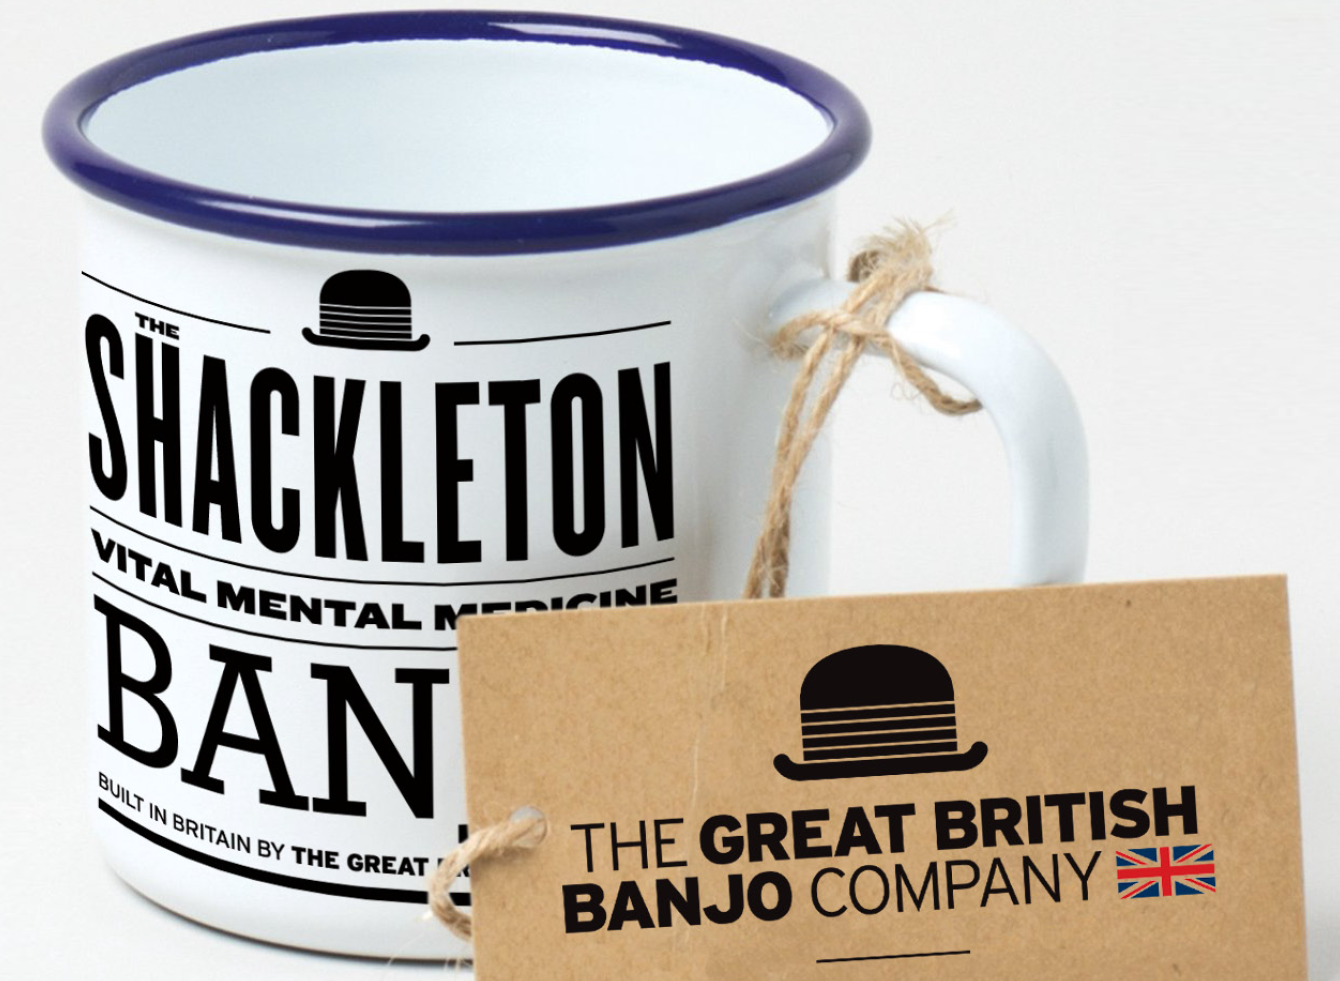 TEnamel mug with visual identity of The Shackleton banjo from The Great British Banjo Company.